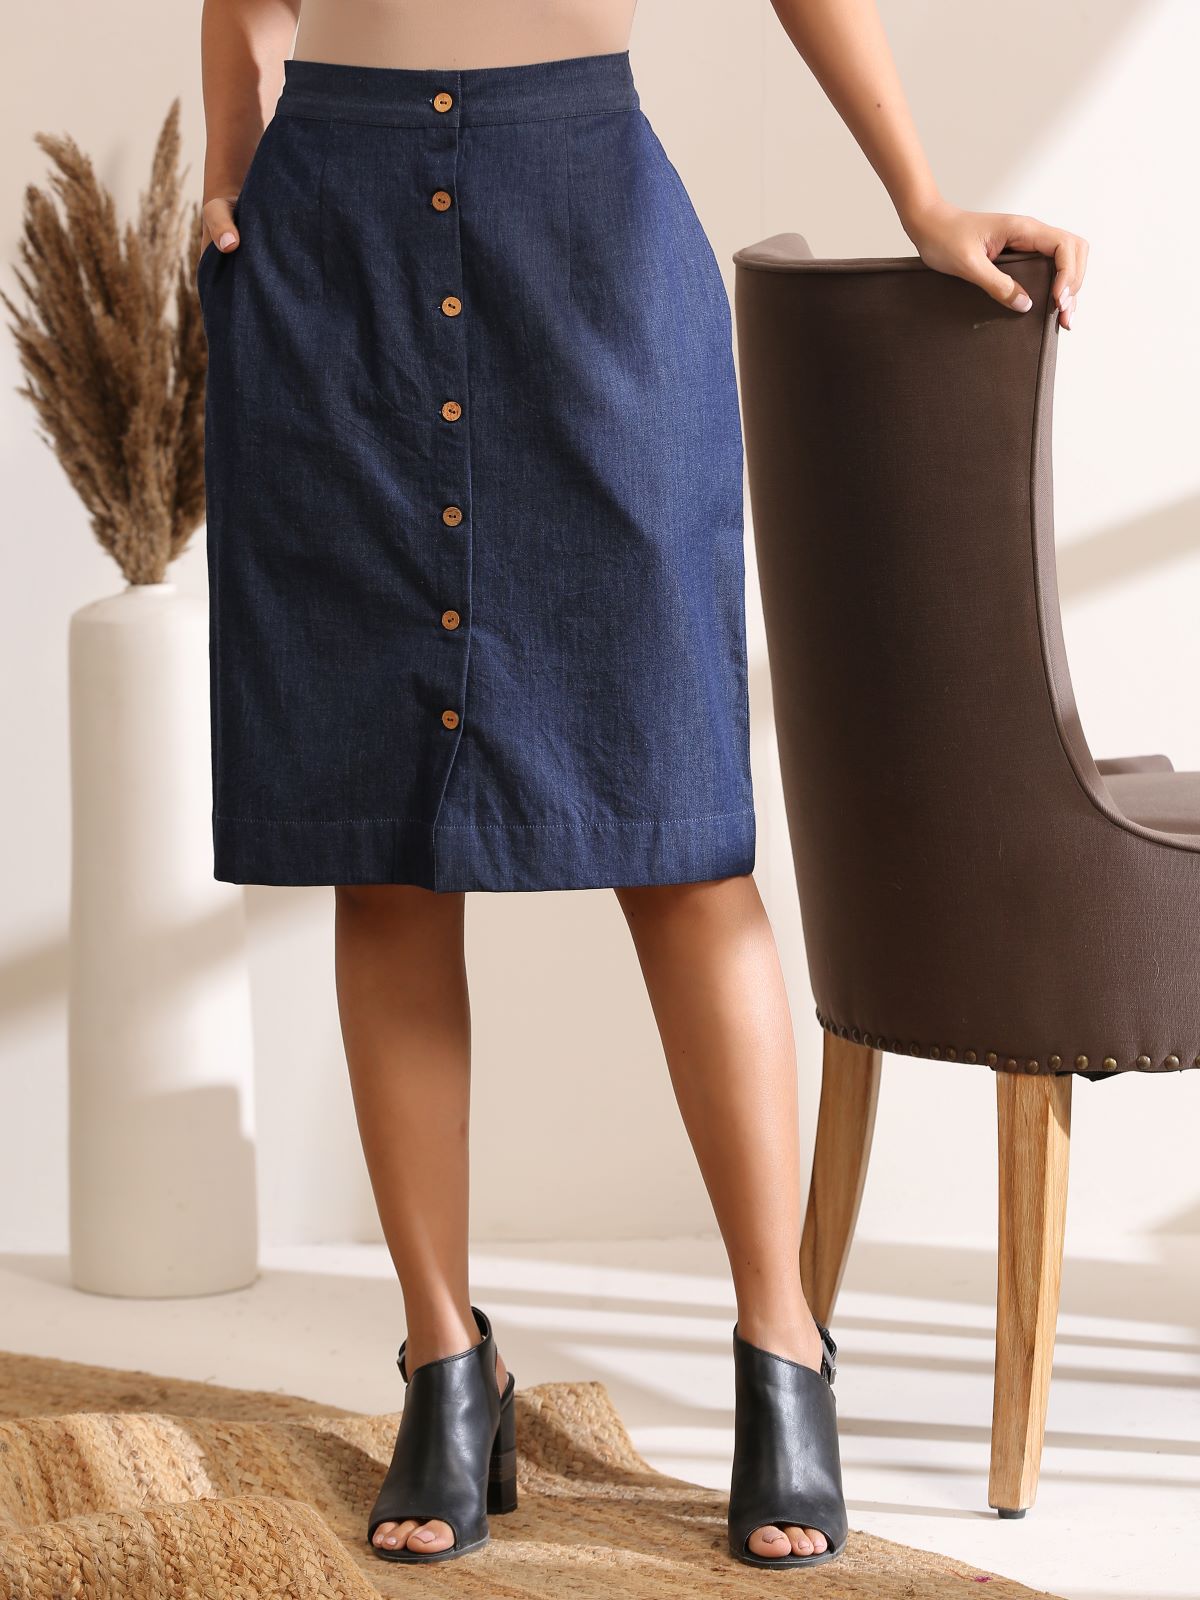 Basic - Dark denim skirt with front buttons